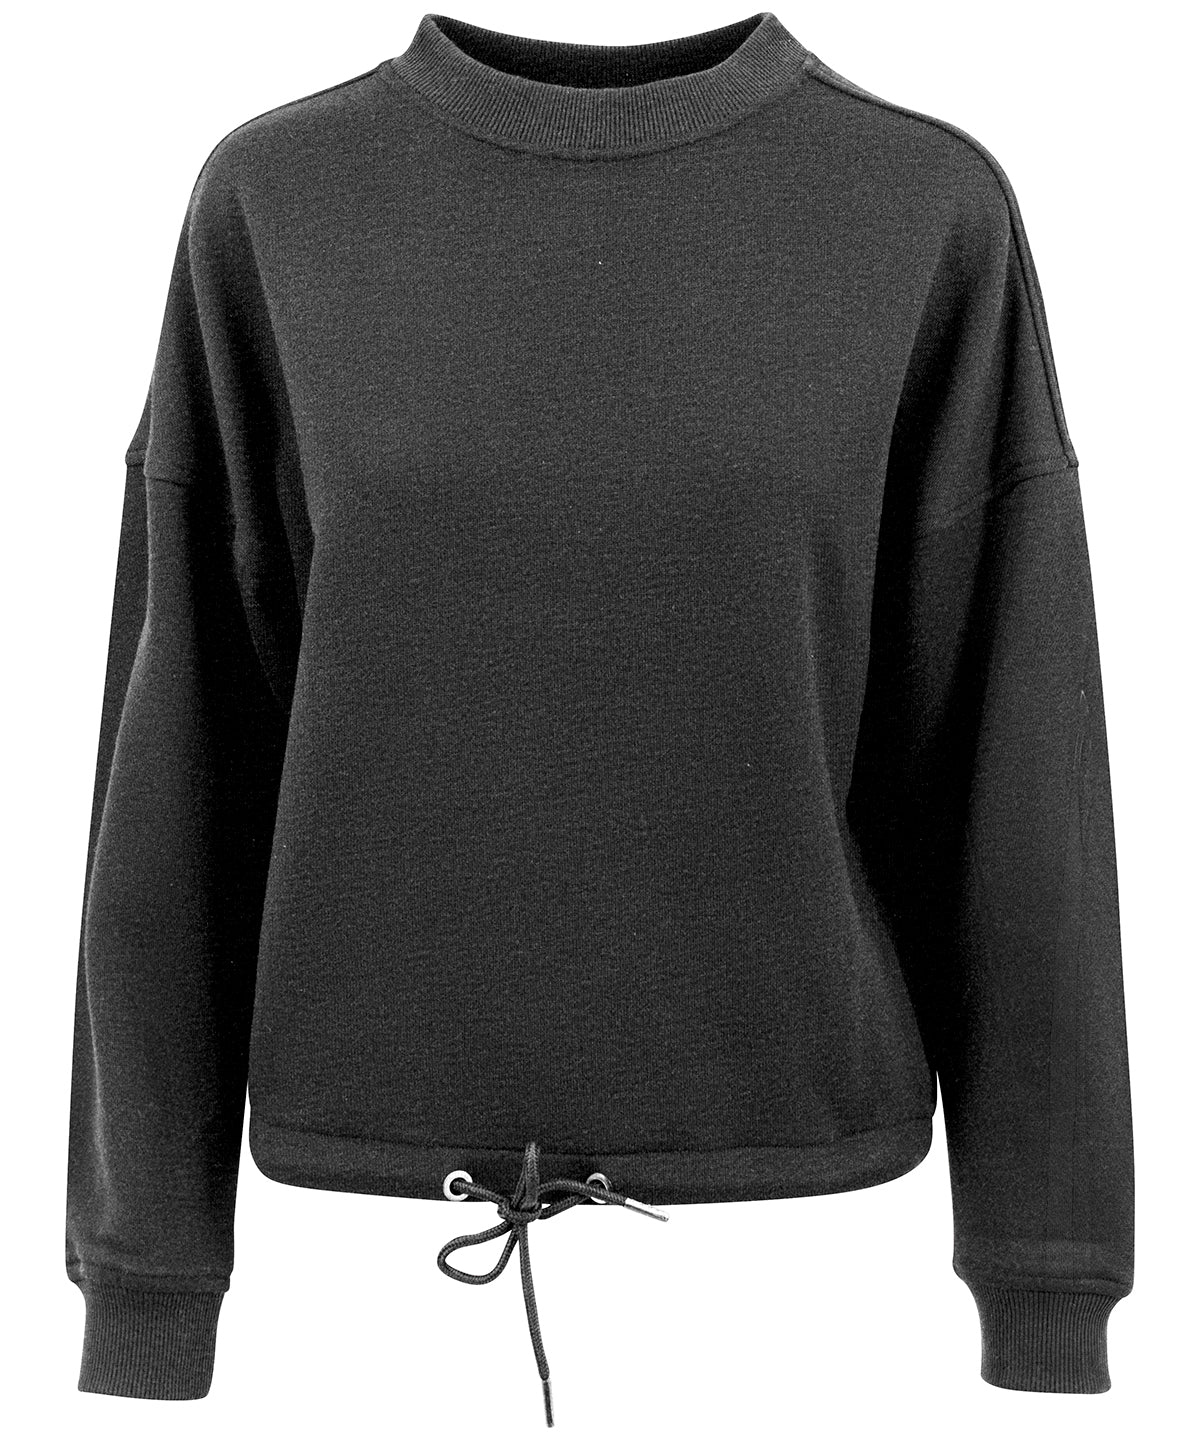 Personalised Sweatshirts - Black Build Your Brand Women's oversize crew neck